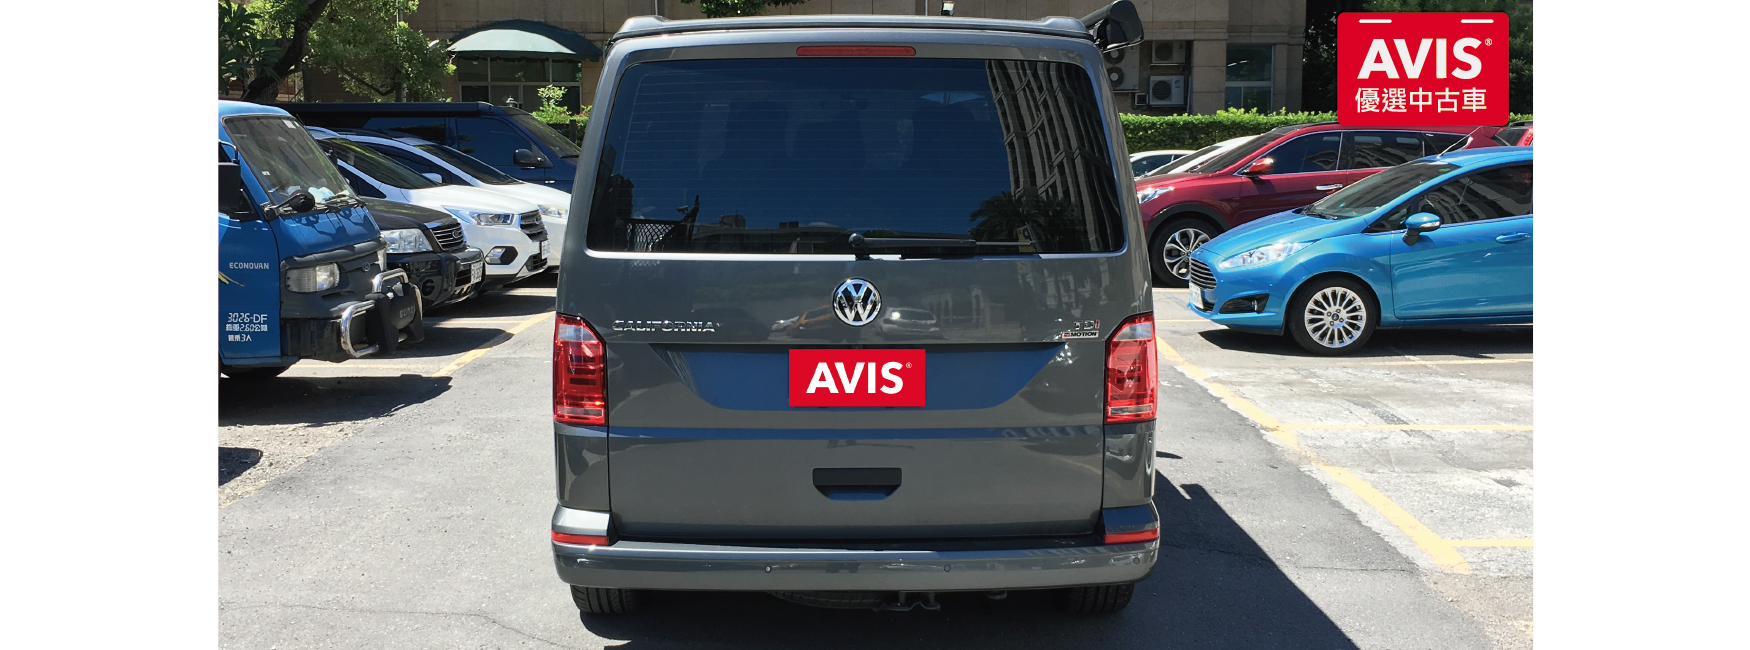 Vw California Beach Br 18 出廠 Br 預計3 月初開始販售 Avis安維斯租車